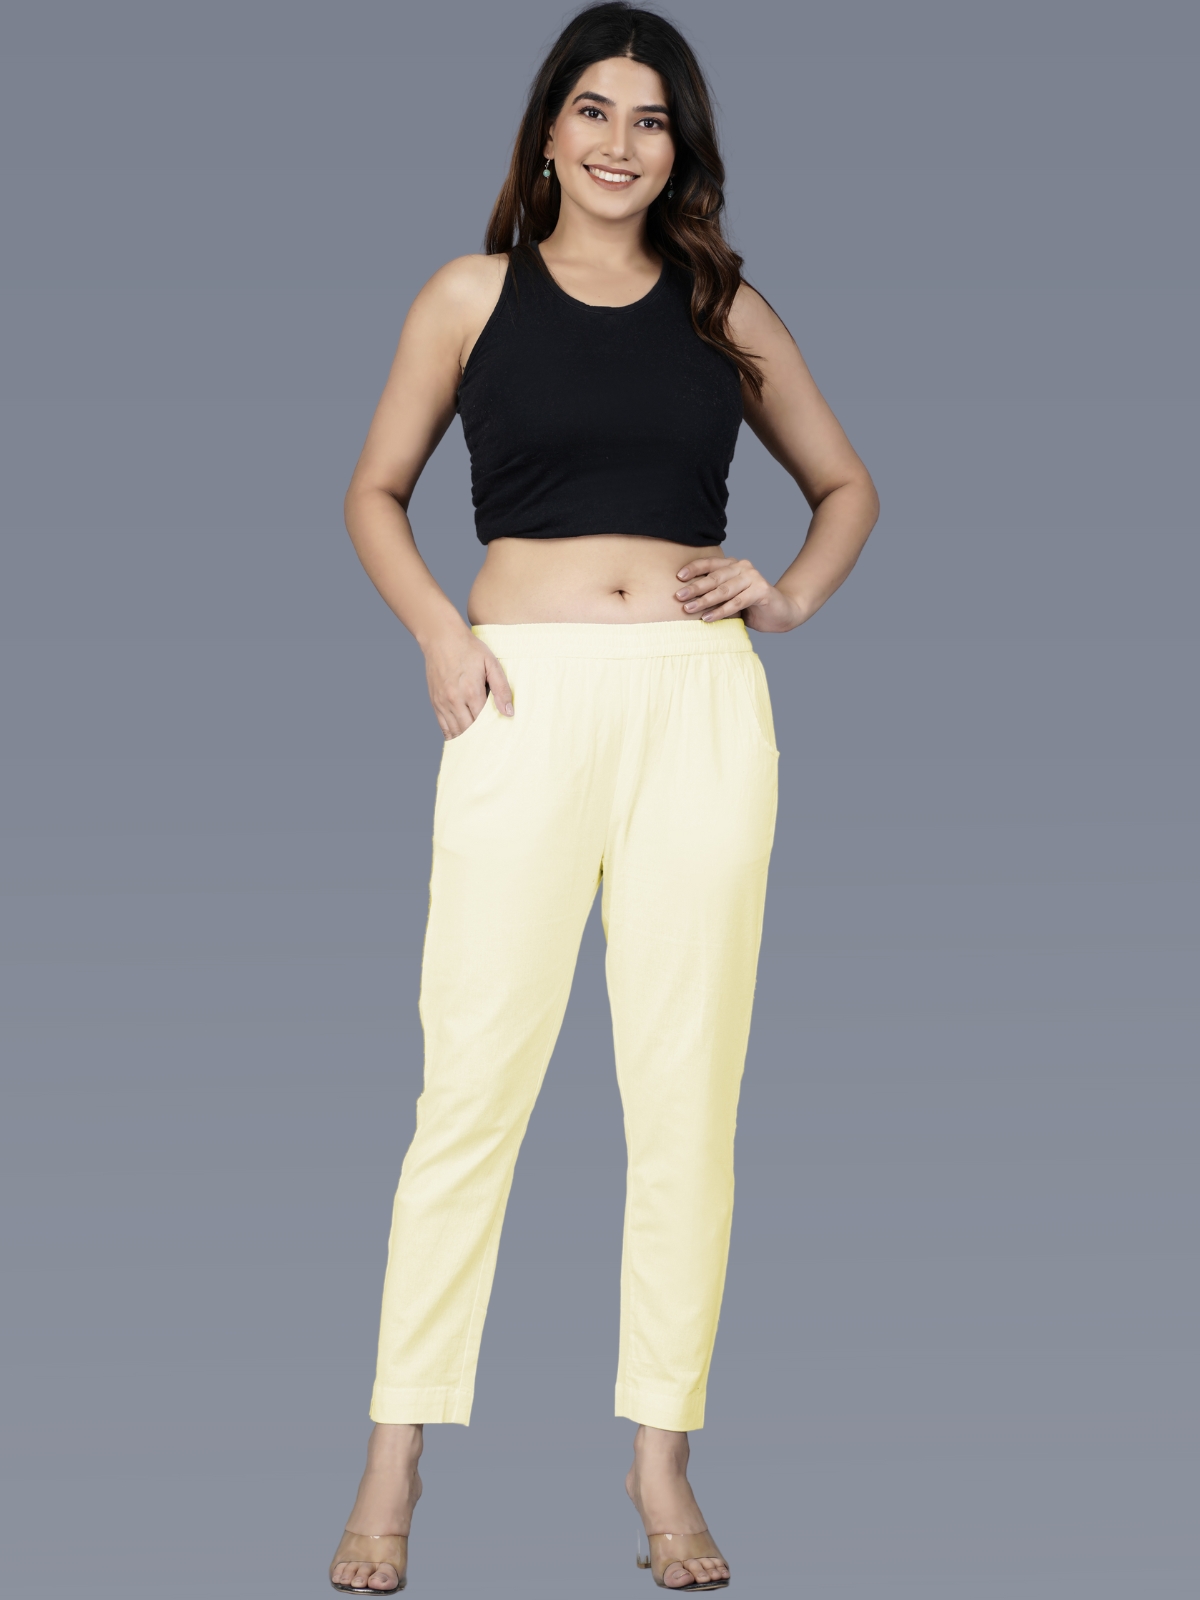 Women039s Summer Linen Cotton Trousers Loose Elastic Waist Straight  Casual Pants  eBay